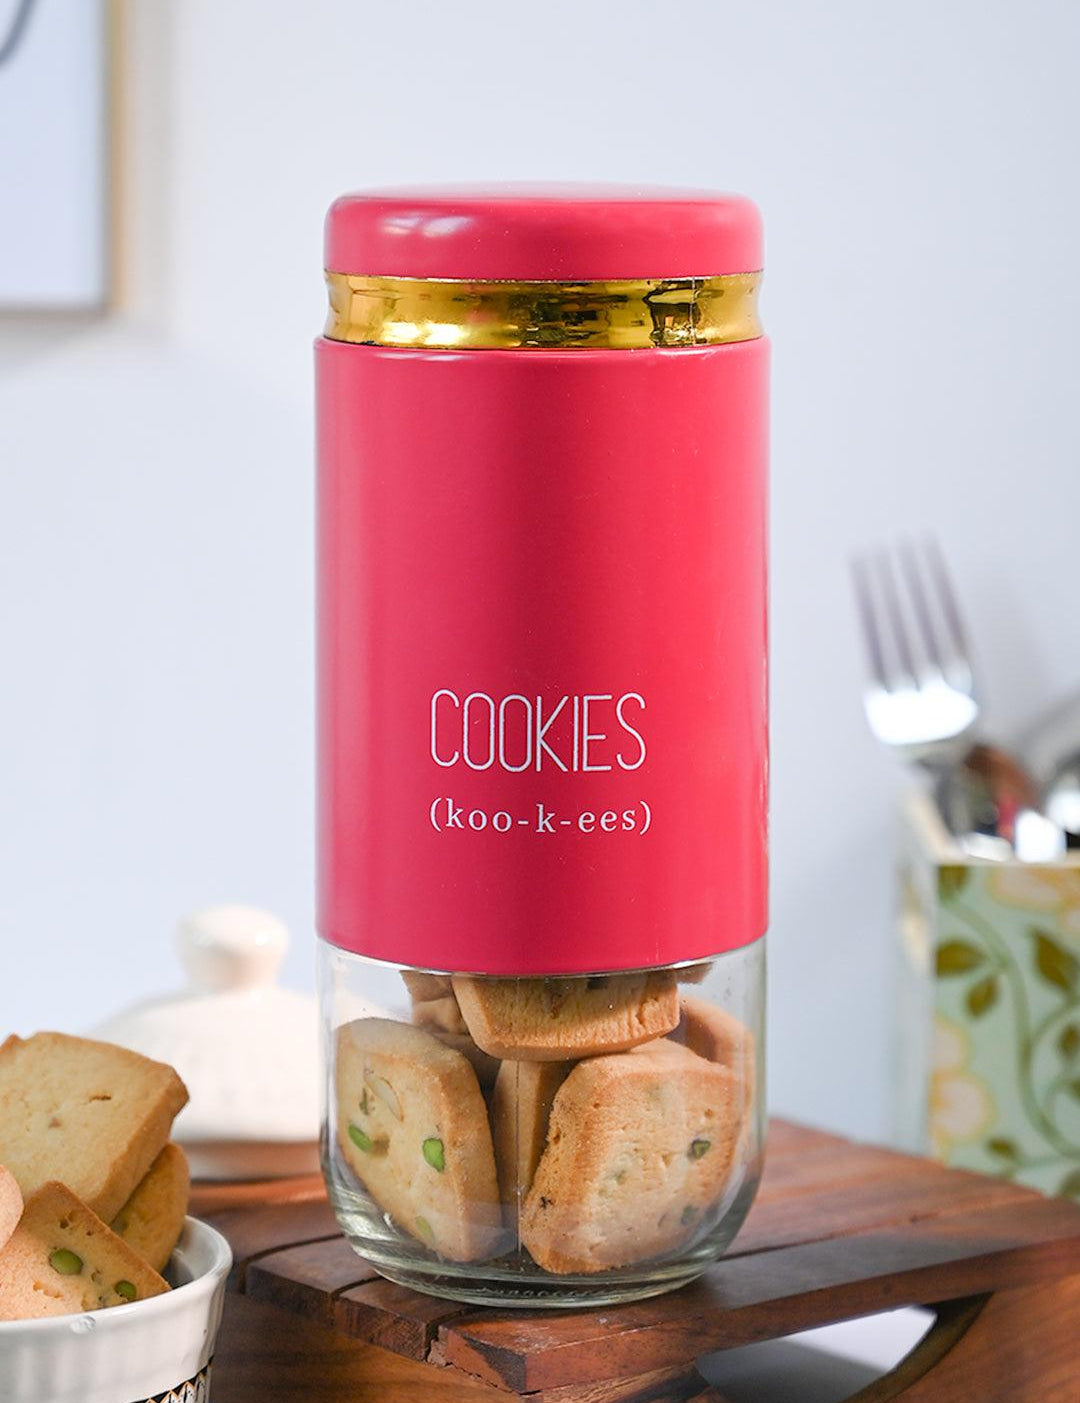 Cookies Storage Jar 850Ml - MARKET99